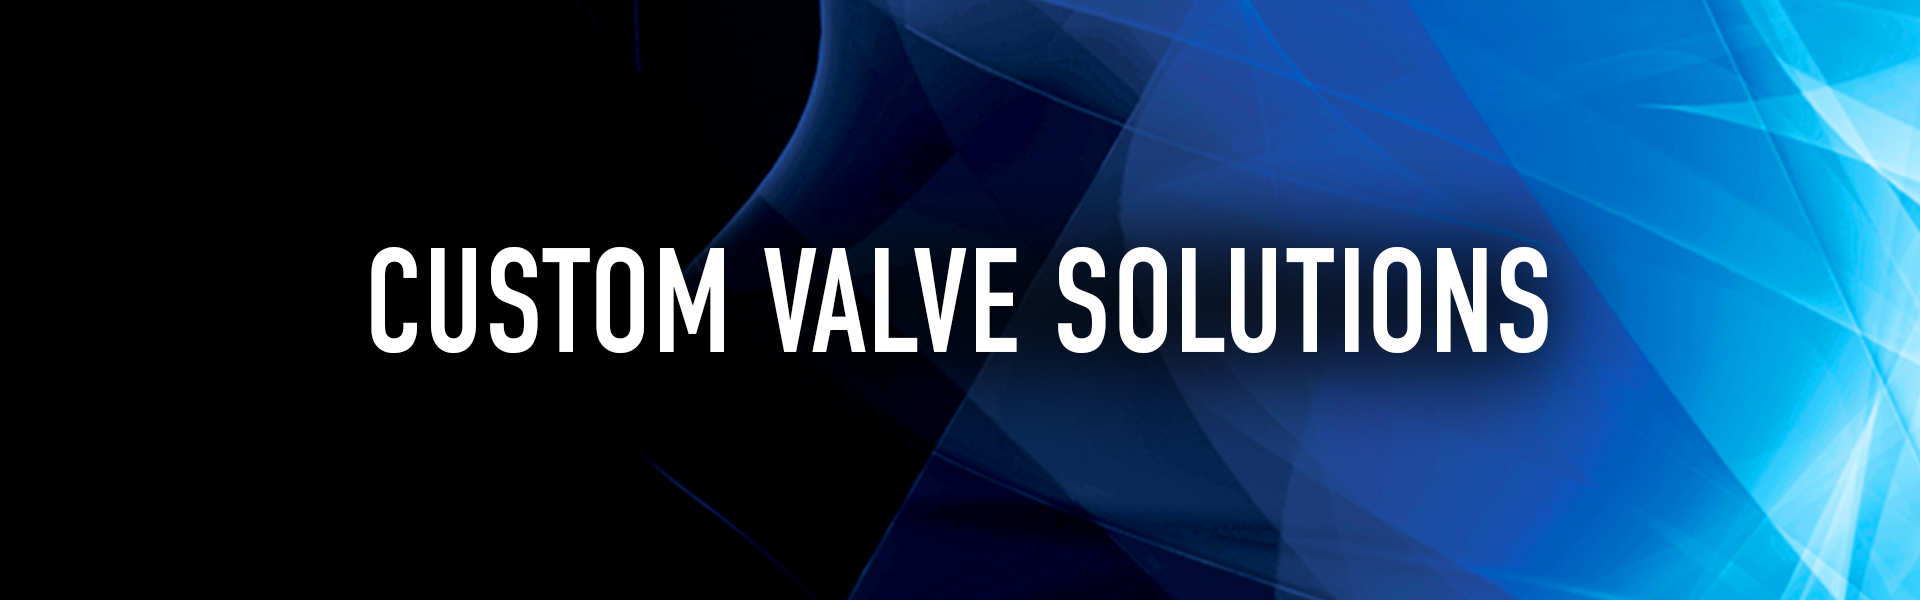 Custom Valve Solutions.png